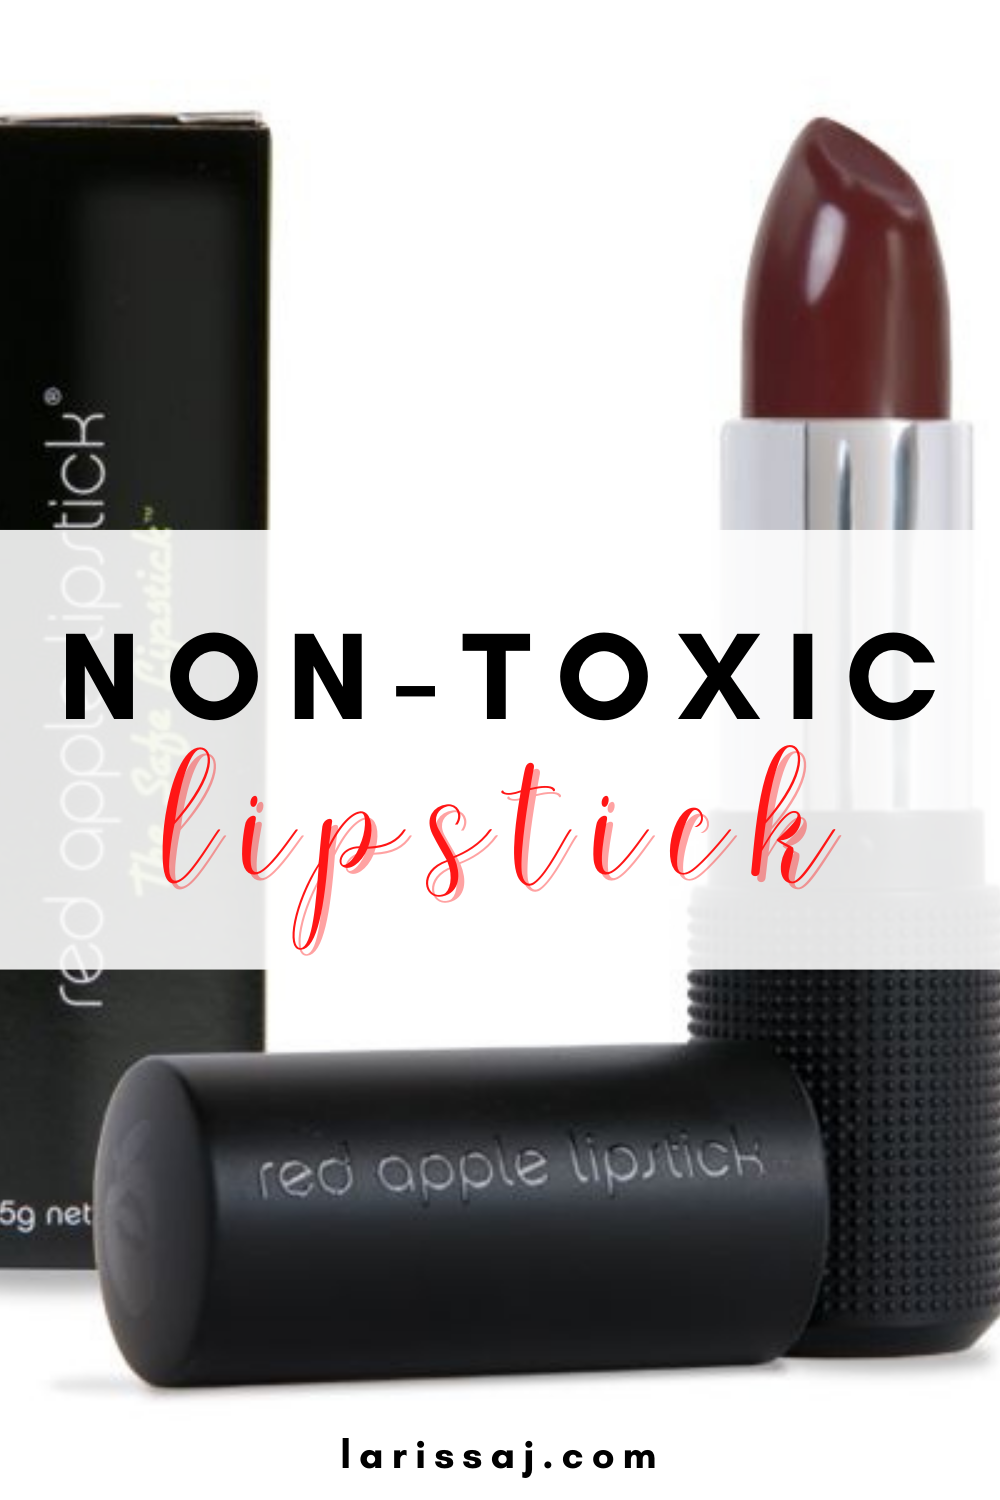 Red Apple Lipstick non toxic lipstick clean beauty